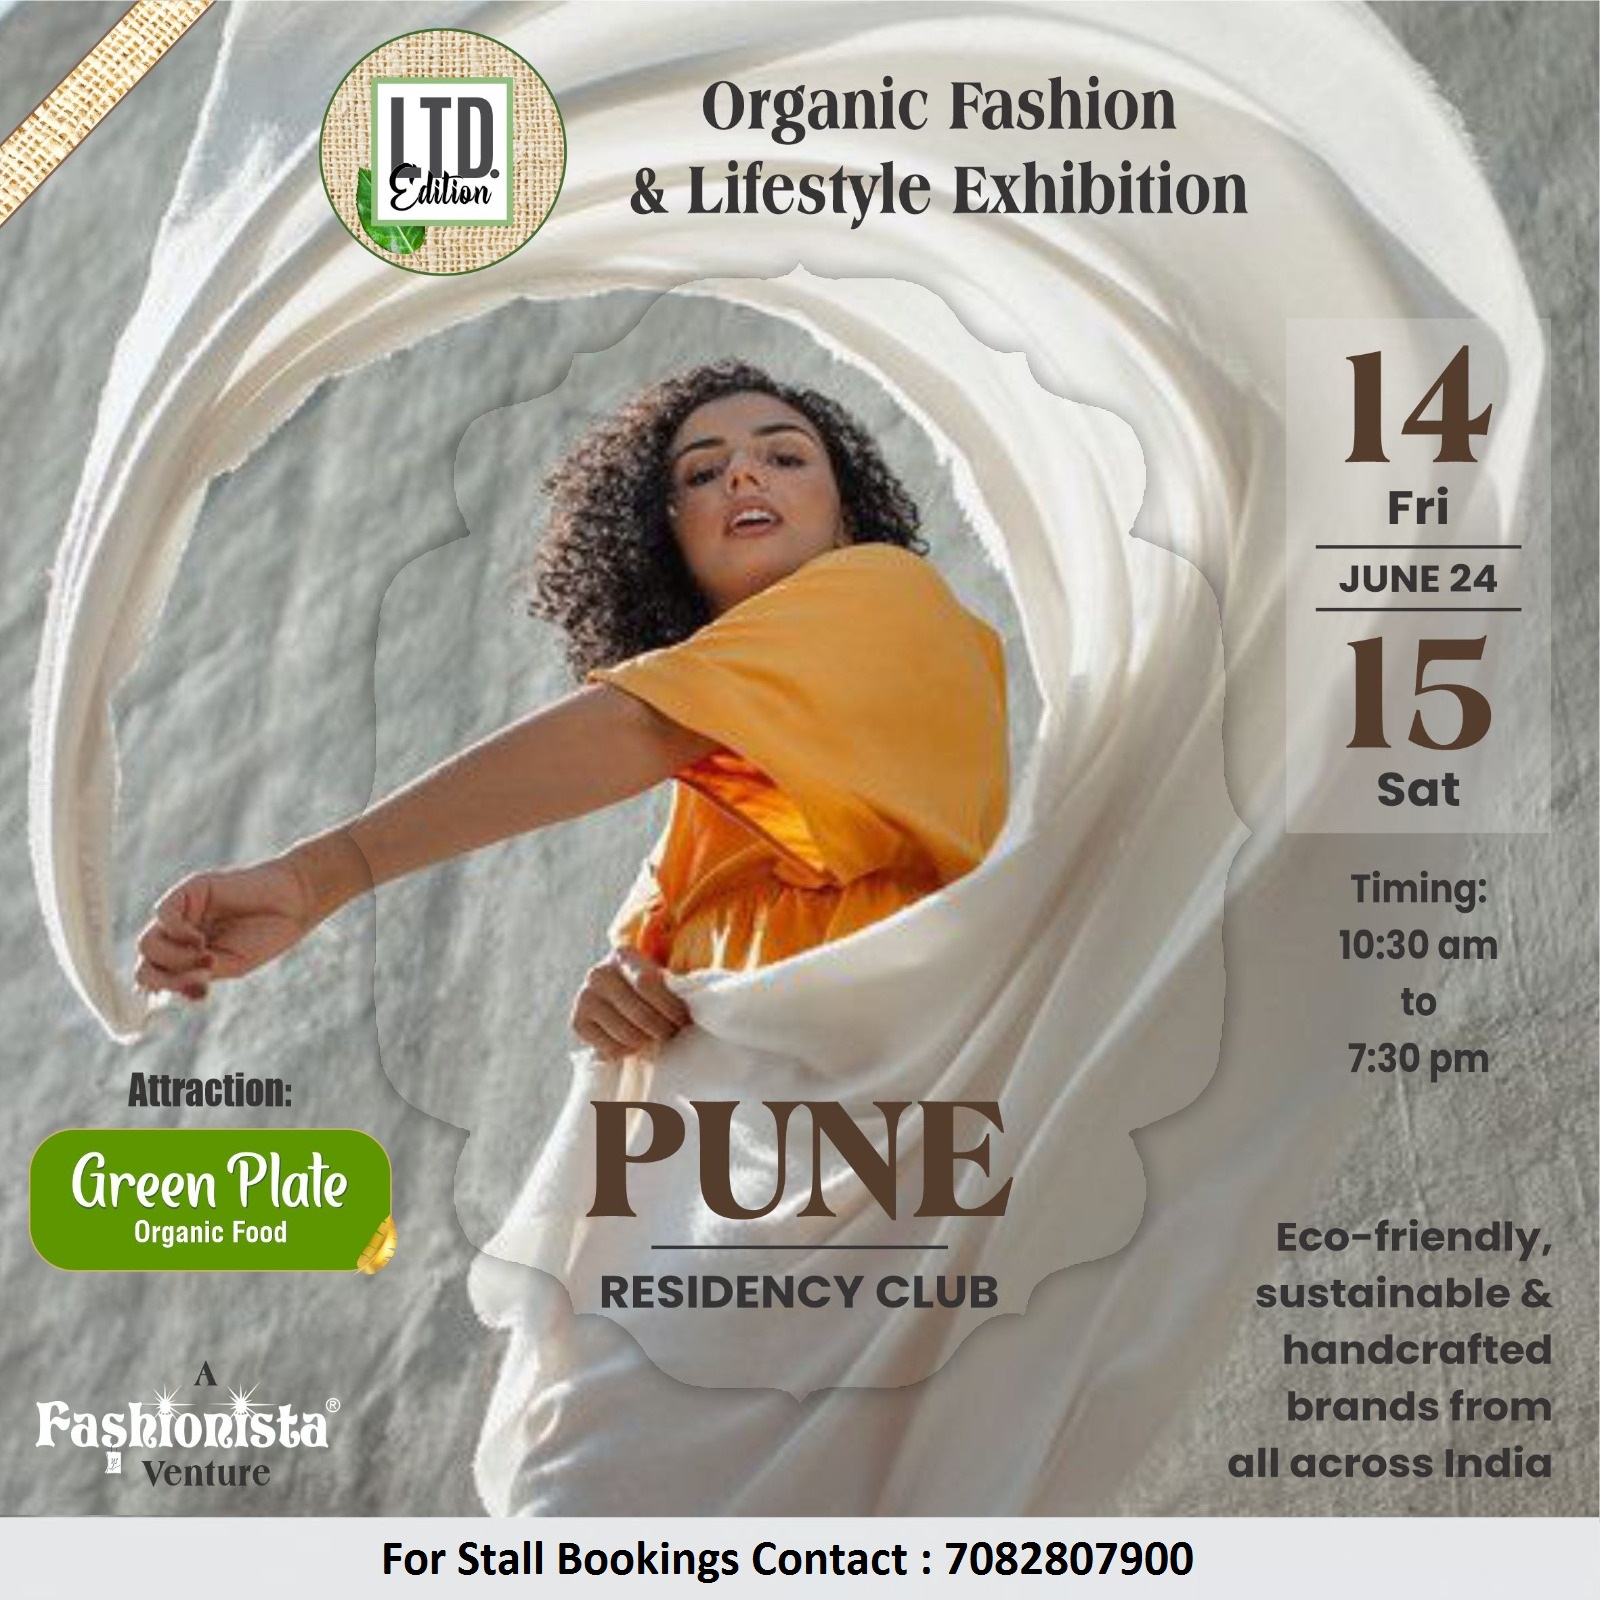 Organic Fashion and Lifestyle Exhibition